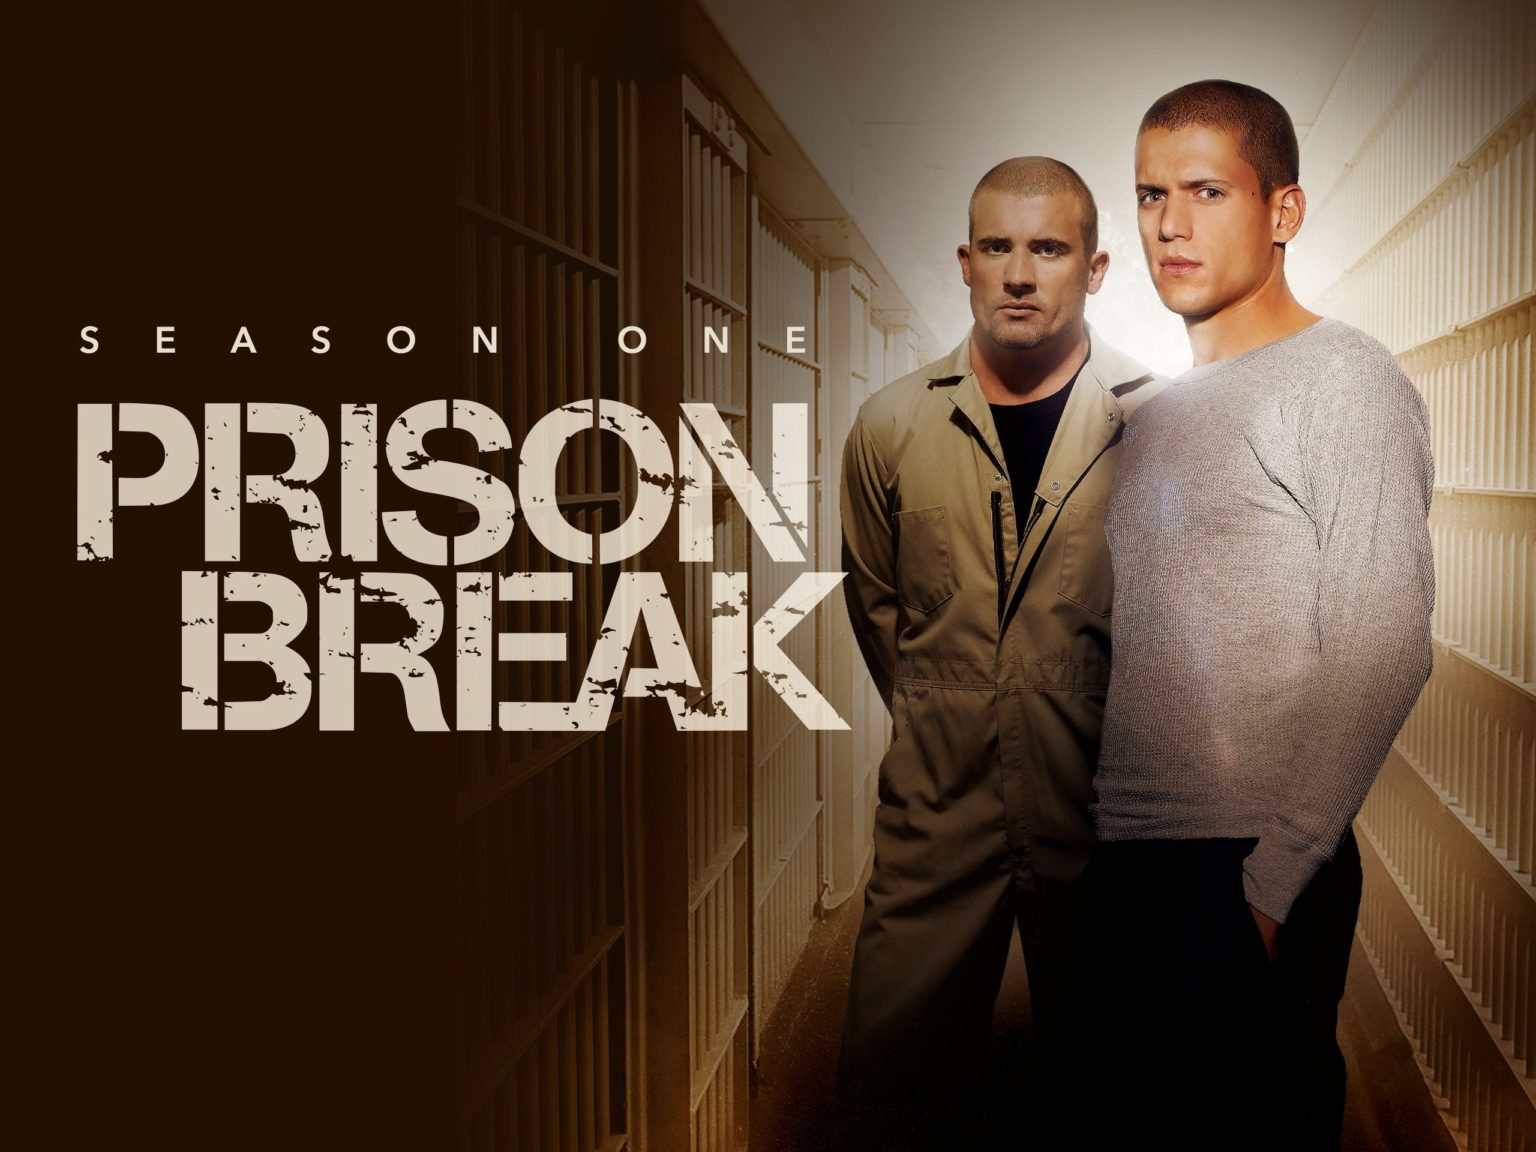 prison break season 1 subtitles english download 720p